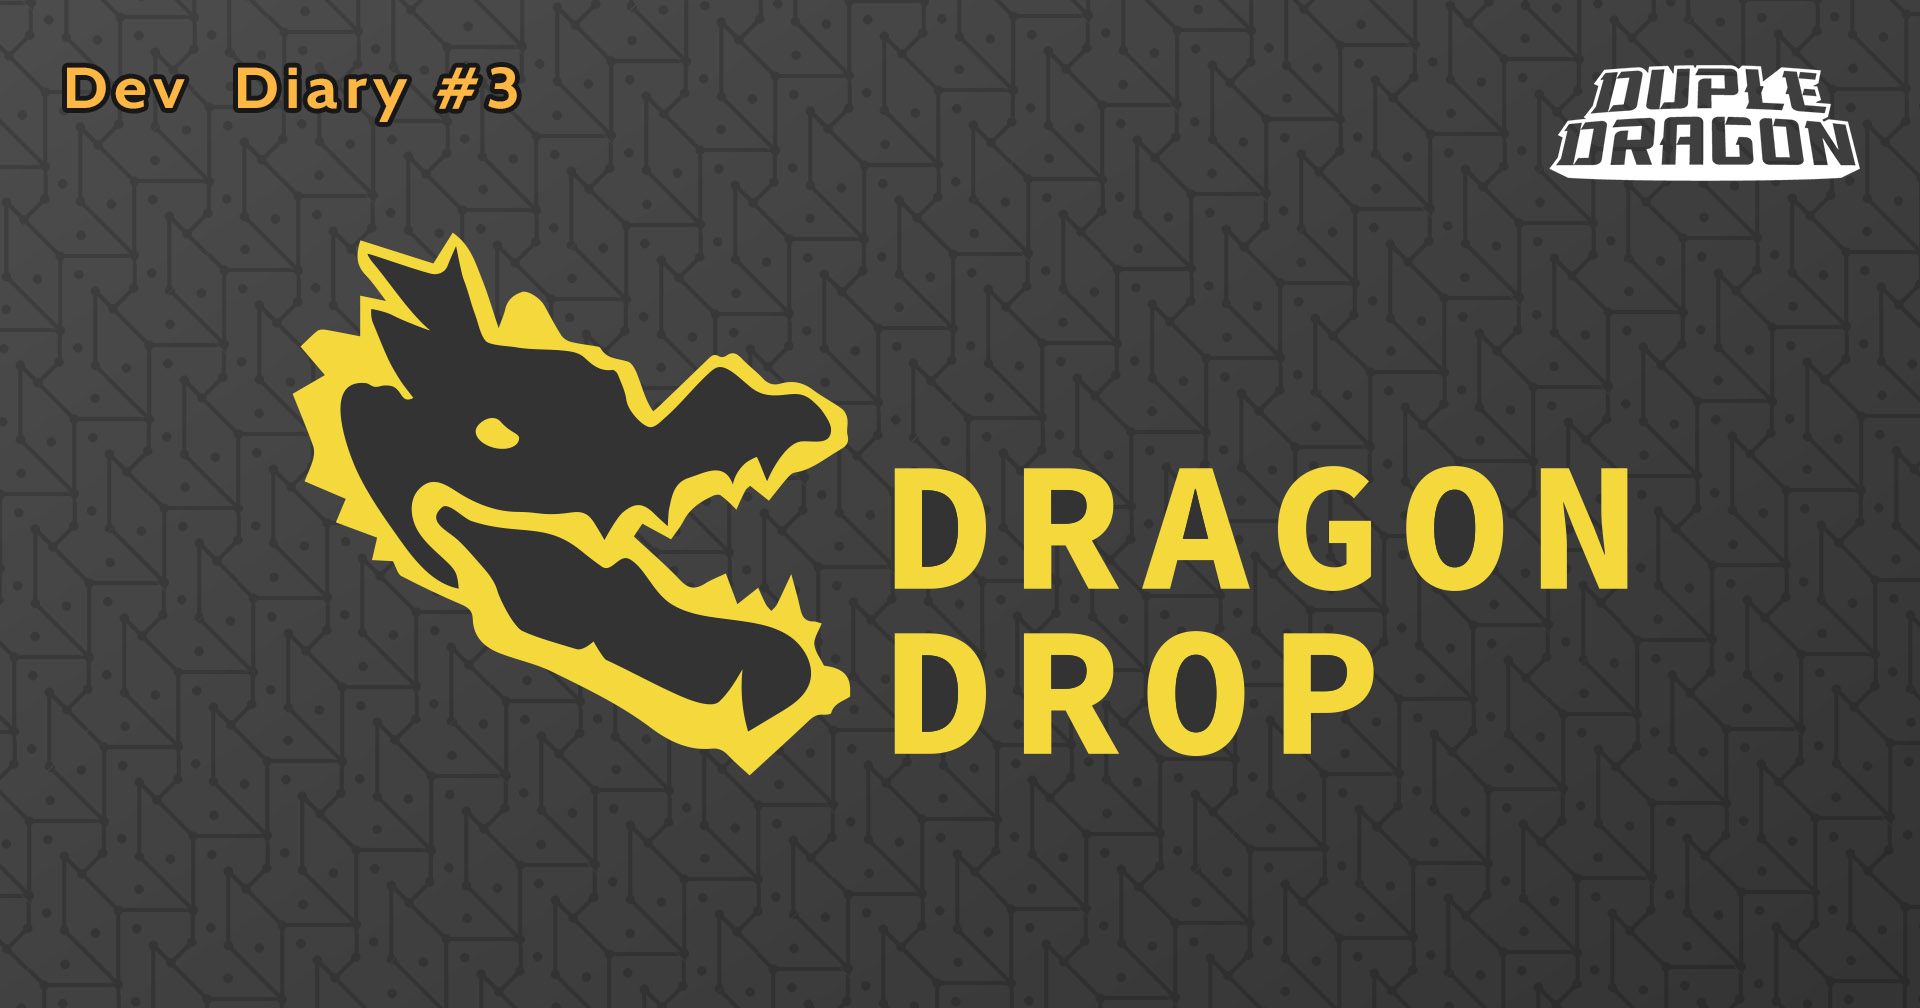 Dev Diary #3: Dragon Drop